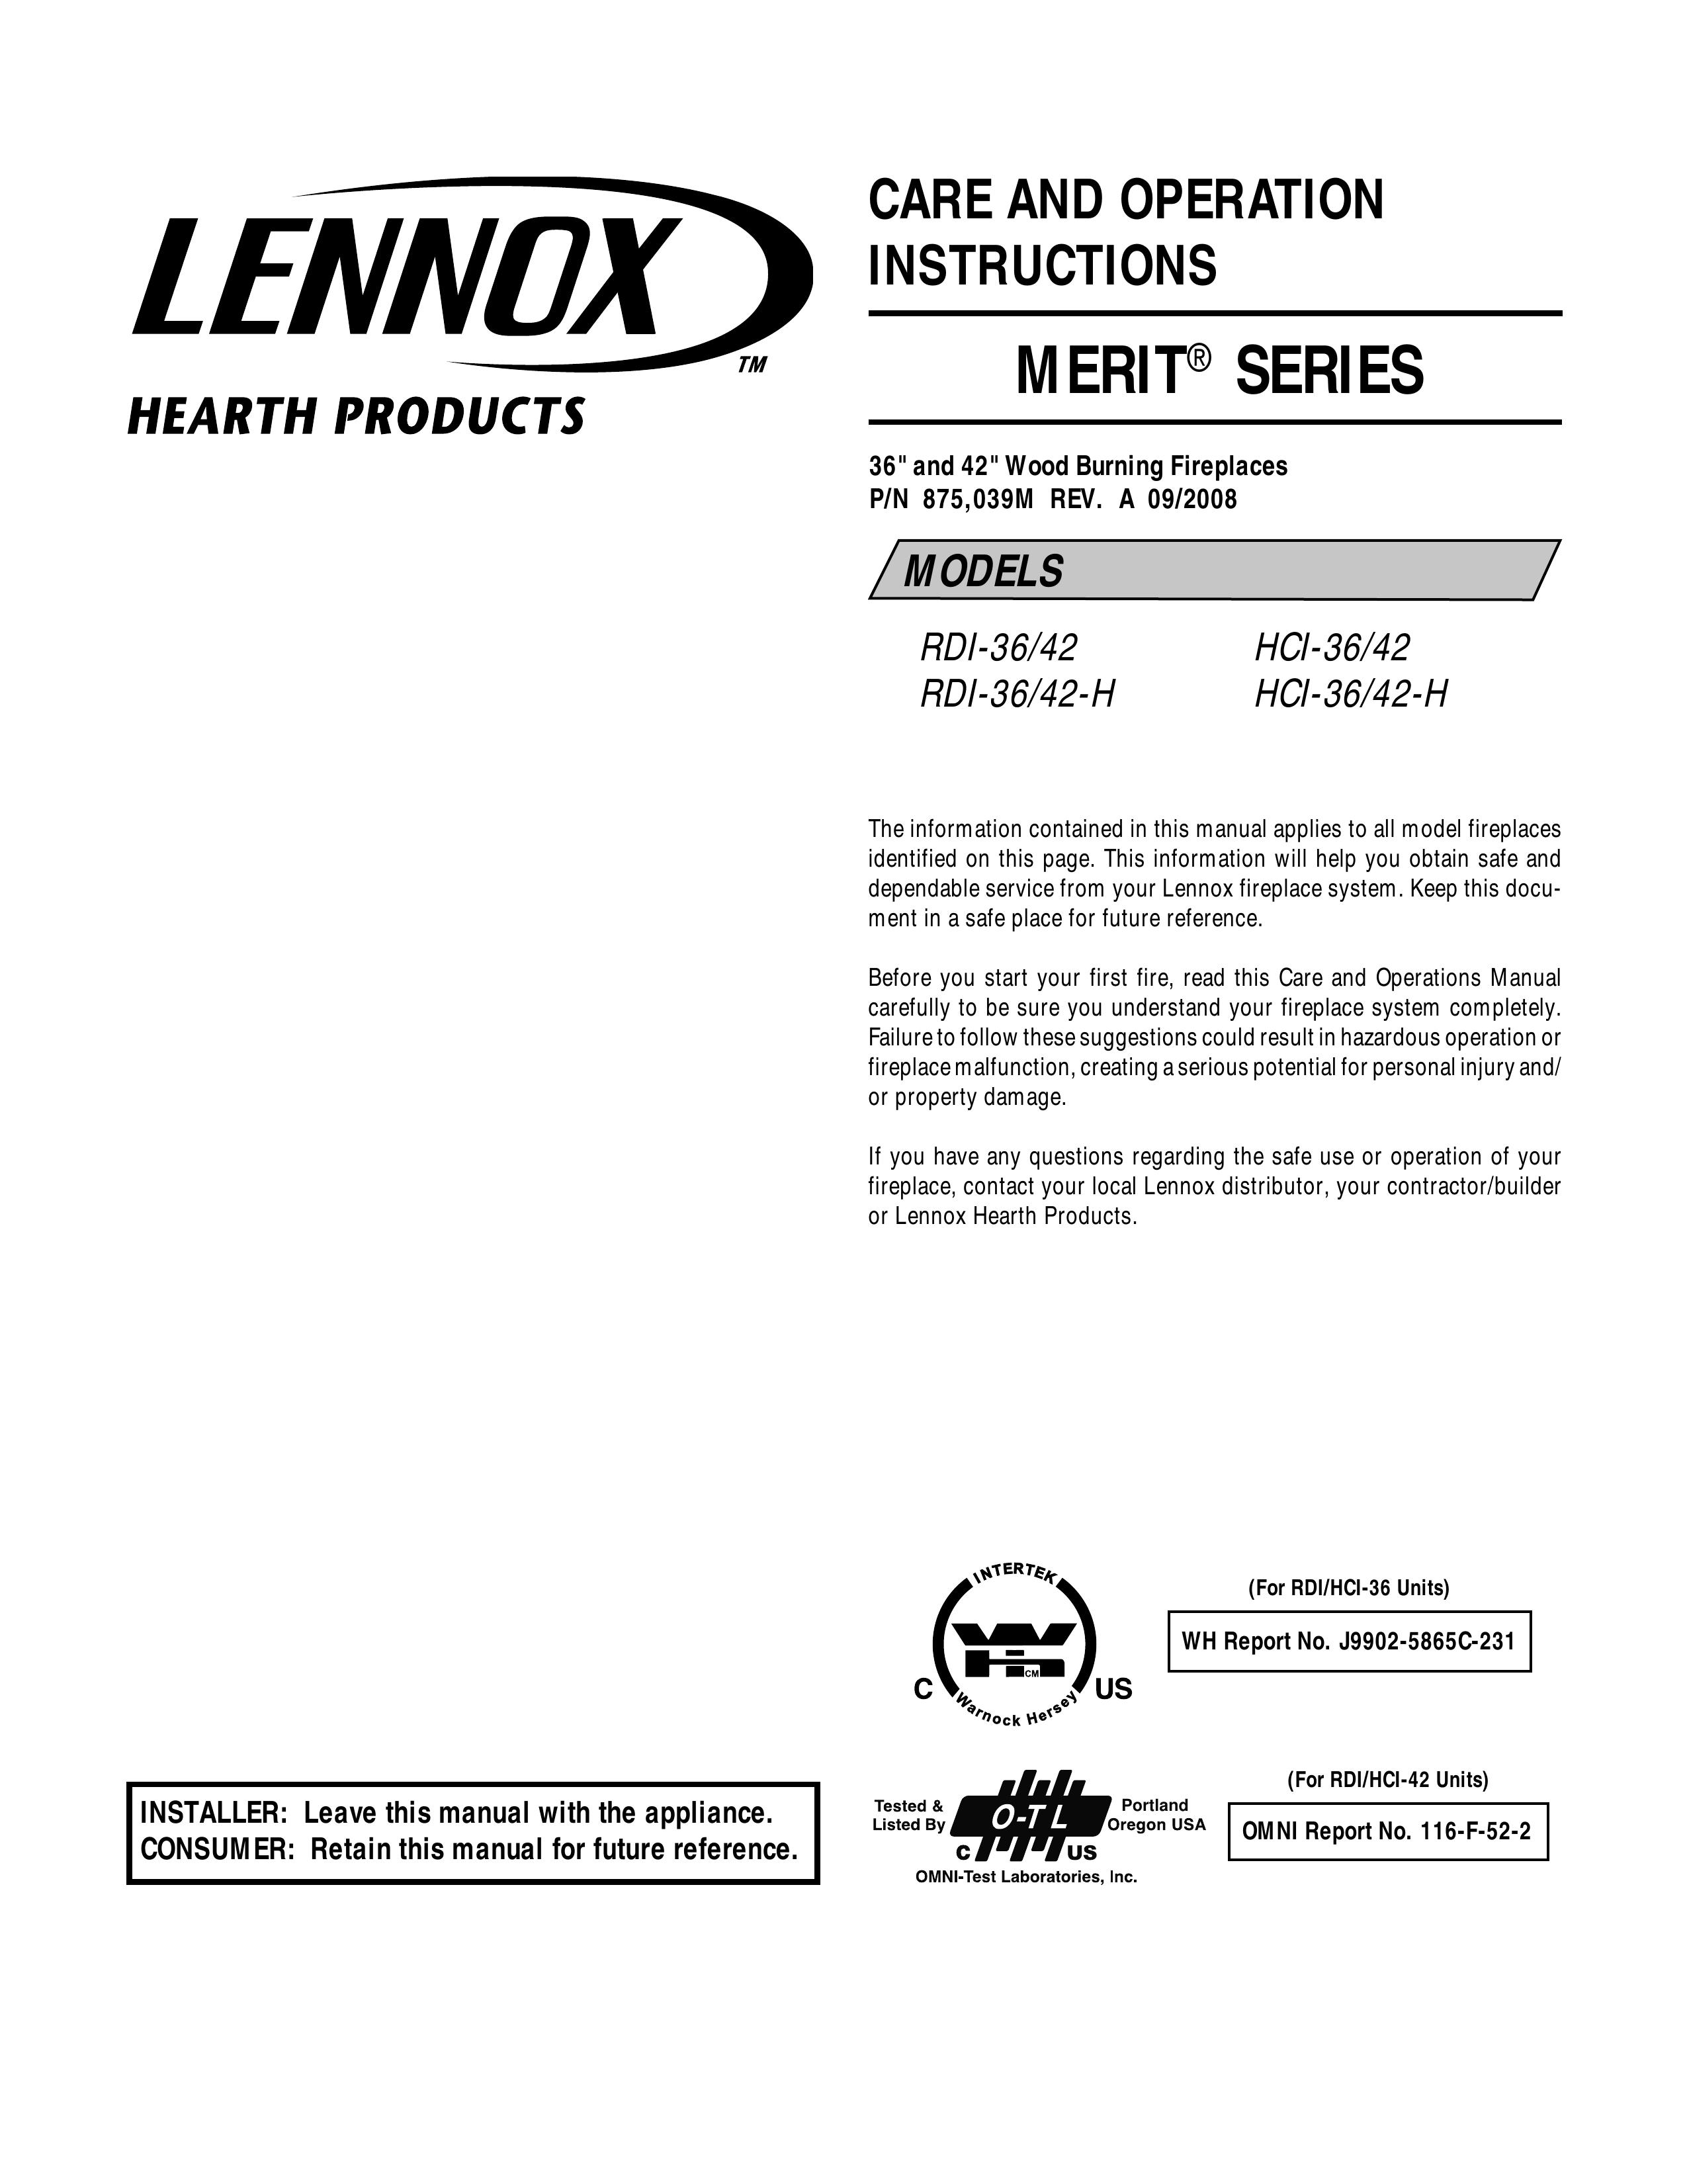 Lennox Hearth HCI-36/42-H Fire Pit User Manual